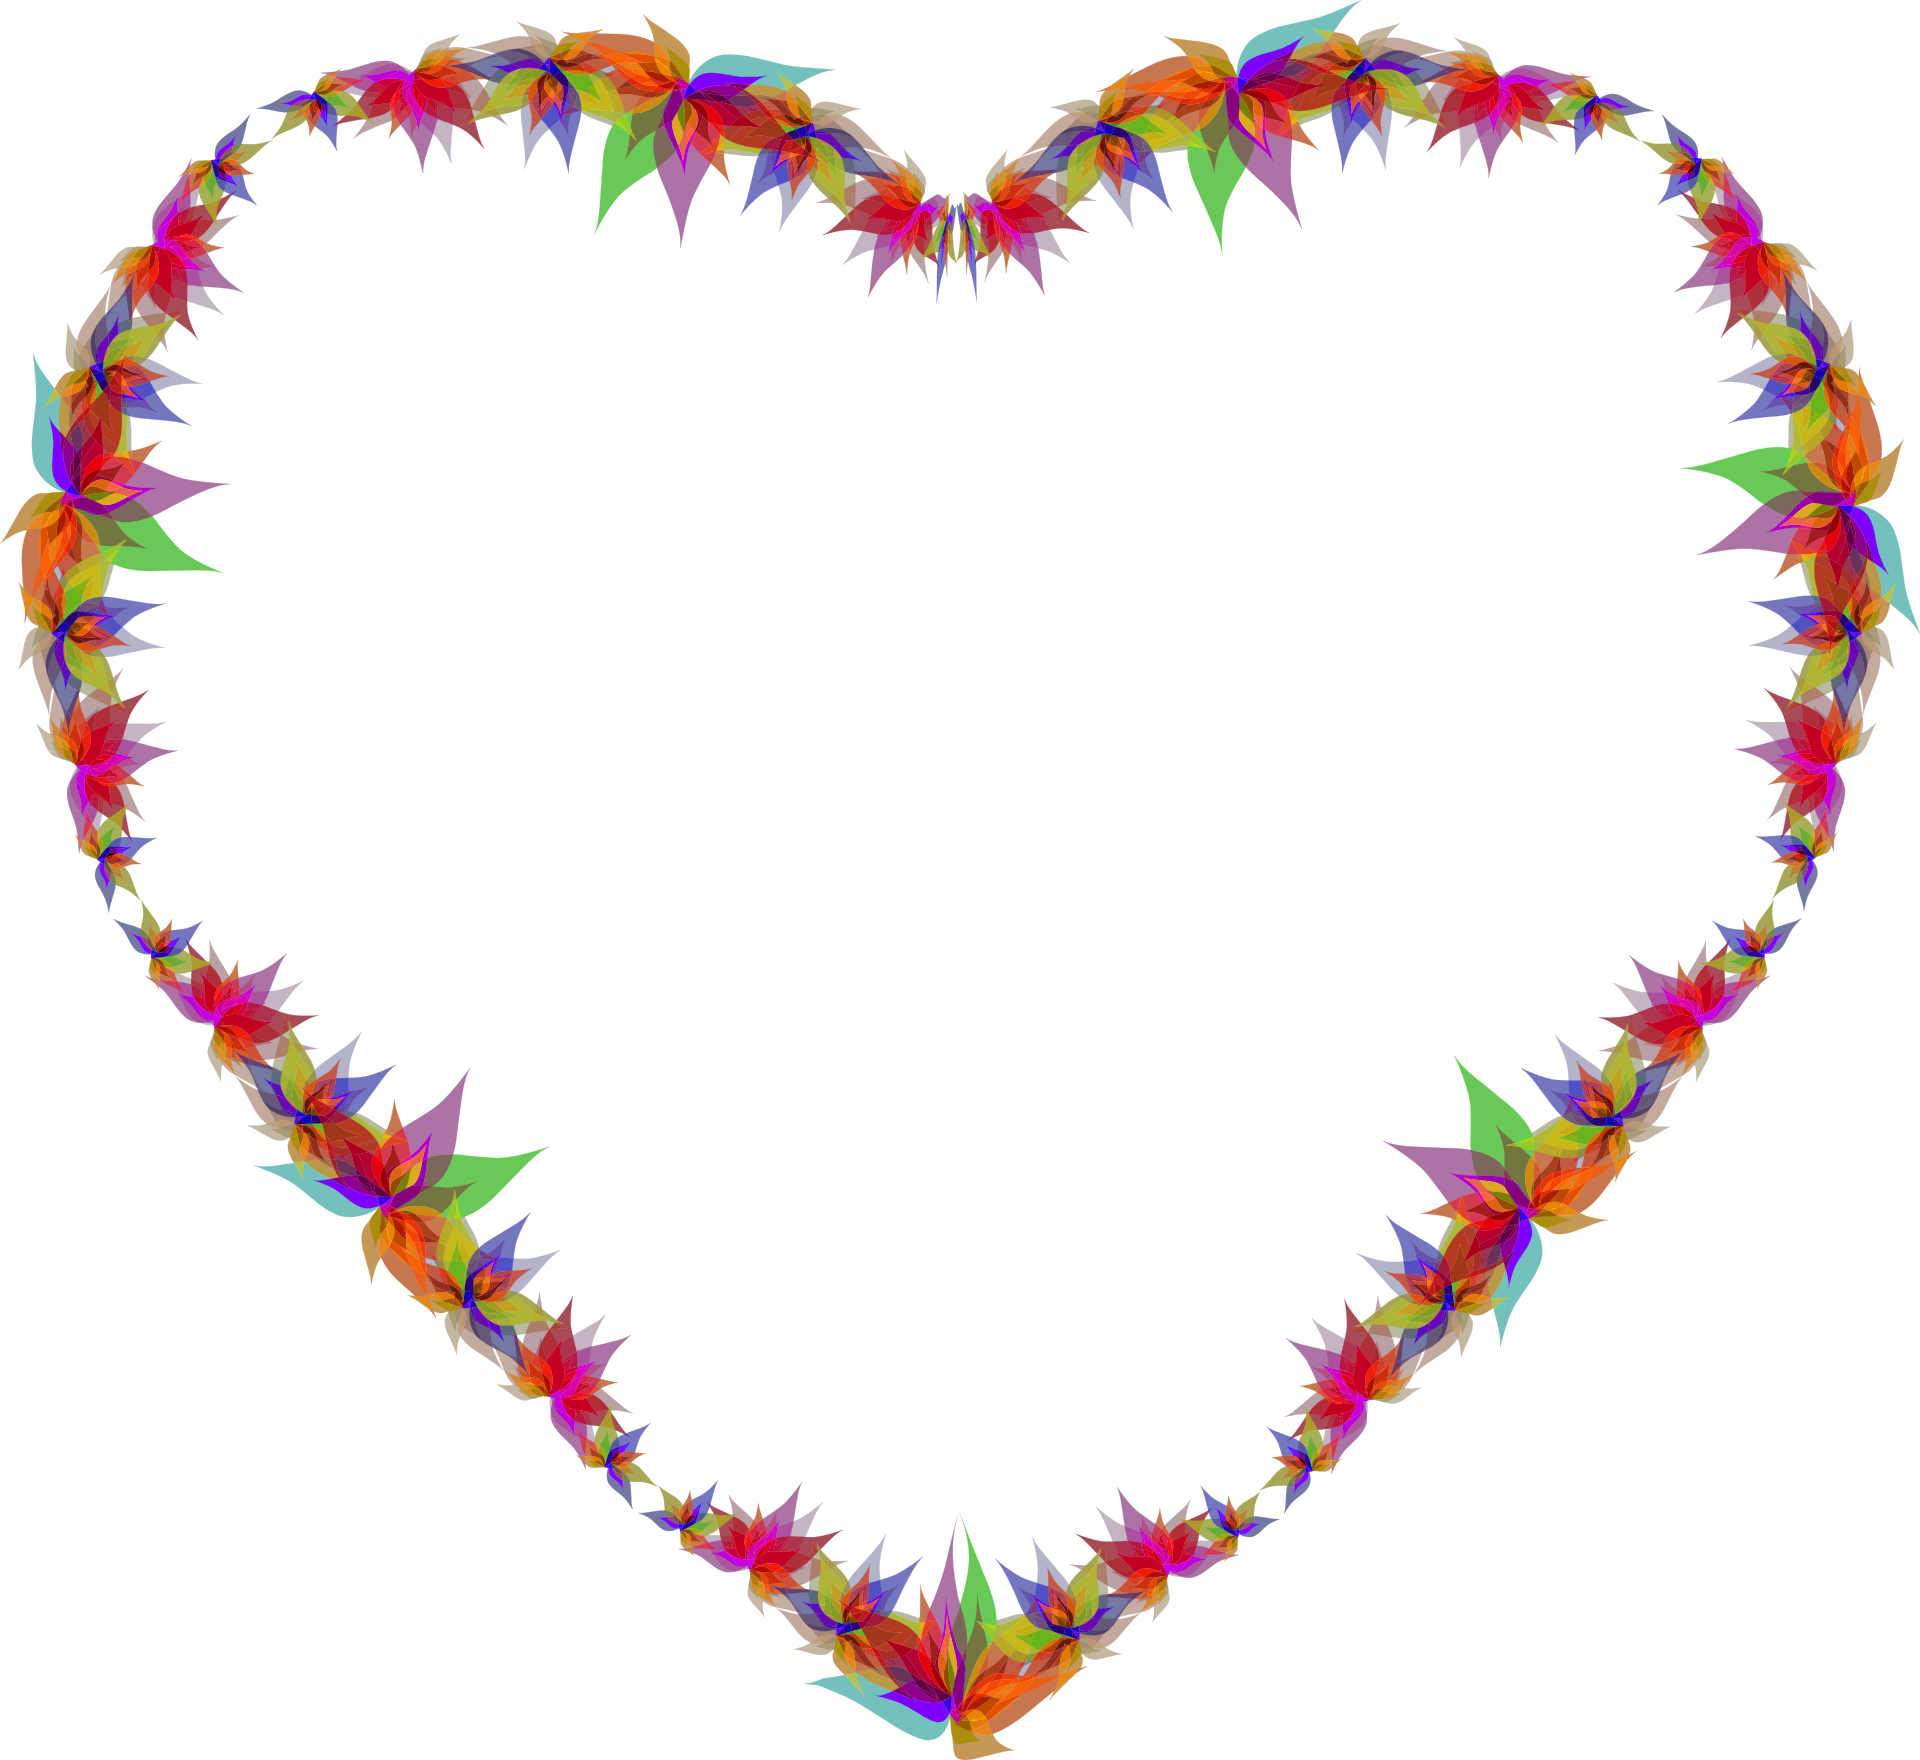 Red Vector Flower Heart PNG Transparent Image